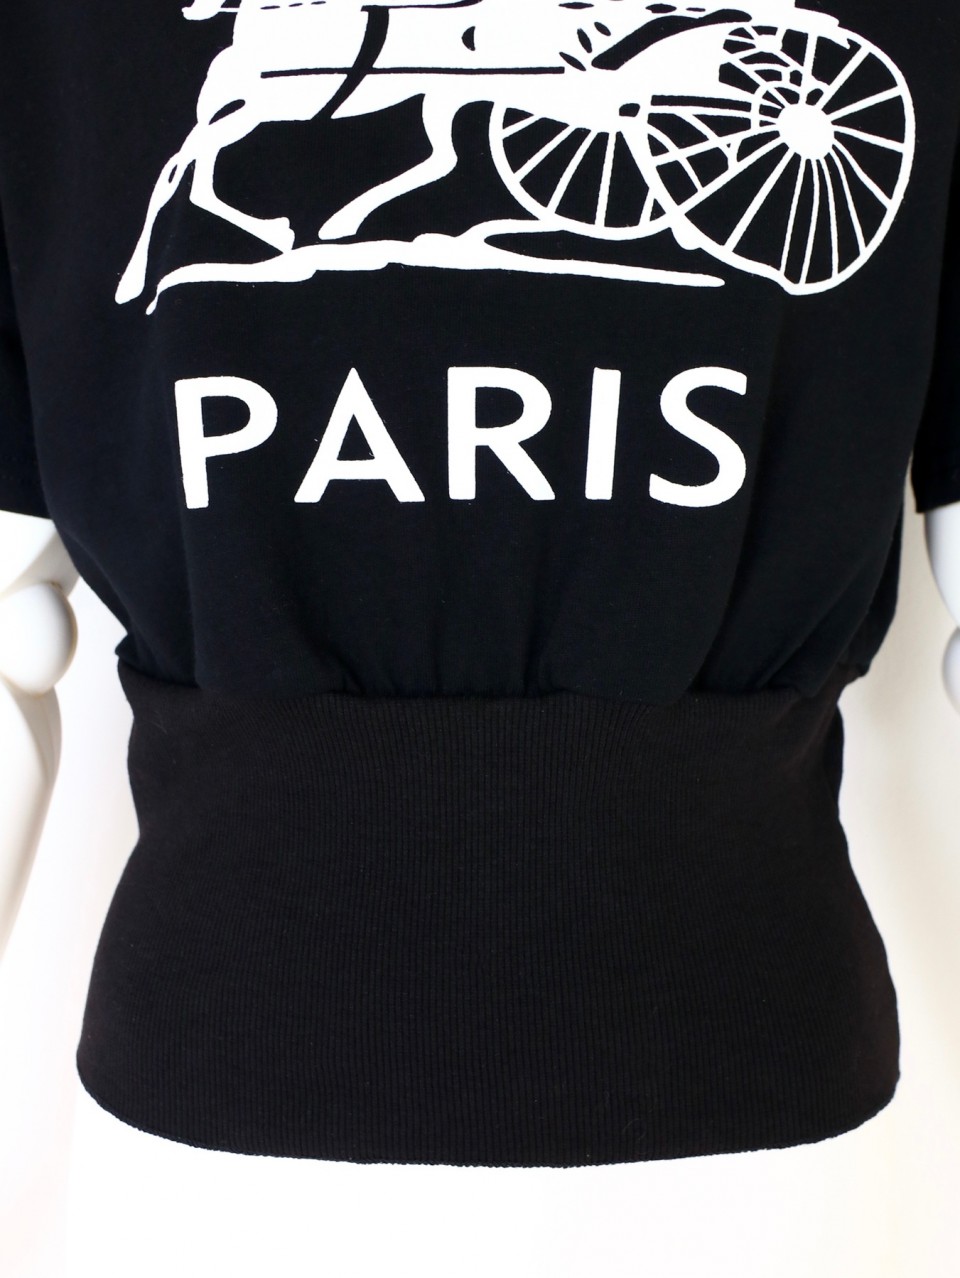 PARISお馬さんTシャツBLACK スタイリングイメージ7